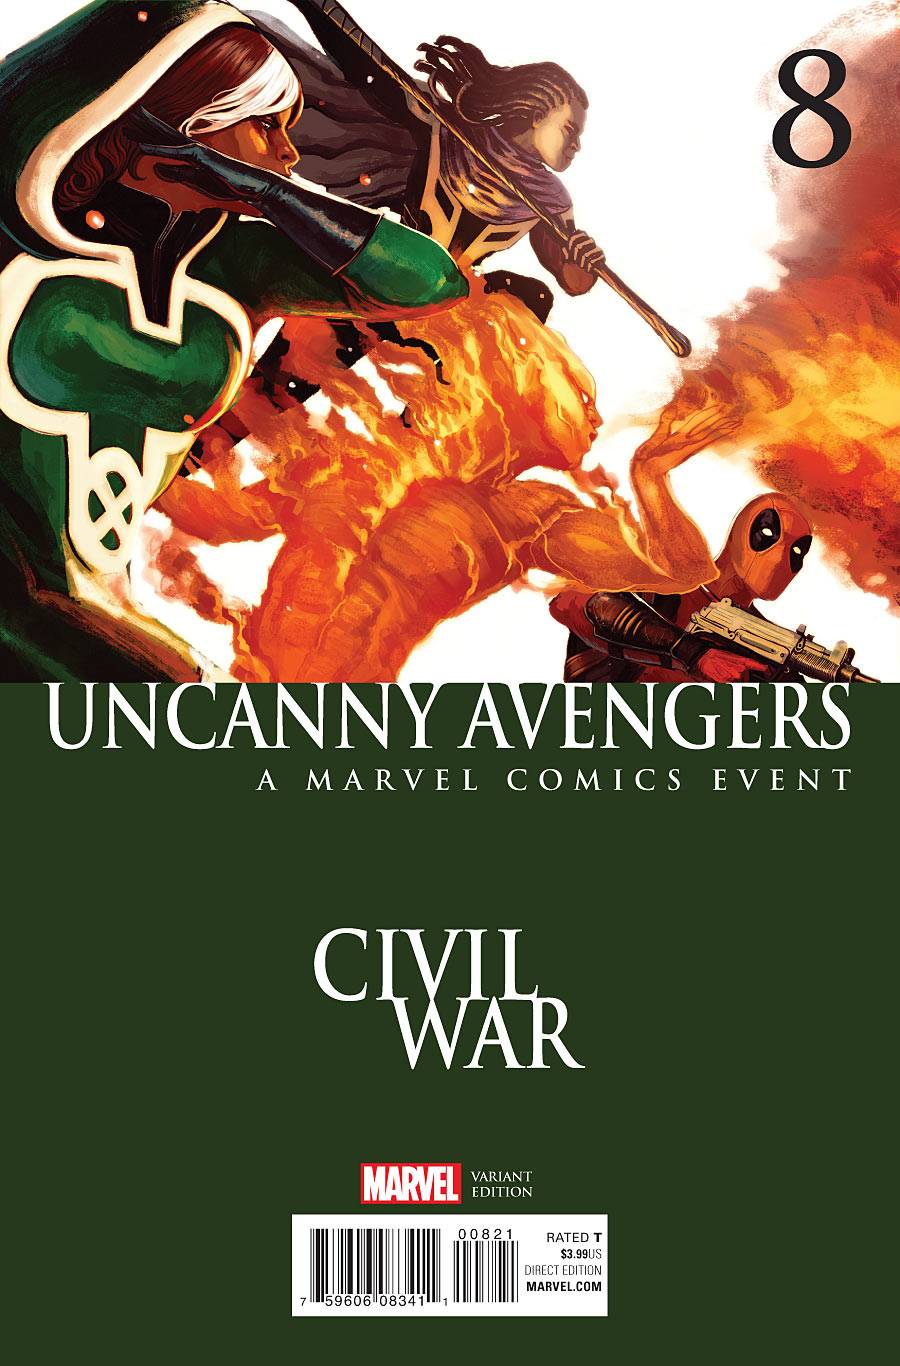 Uncanny Avengers #8 Civil War Variant Aso (2015)